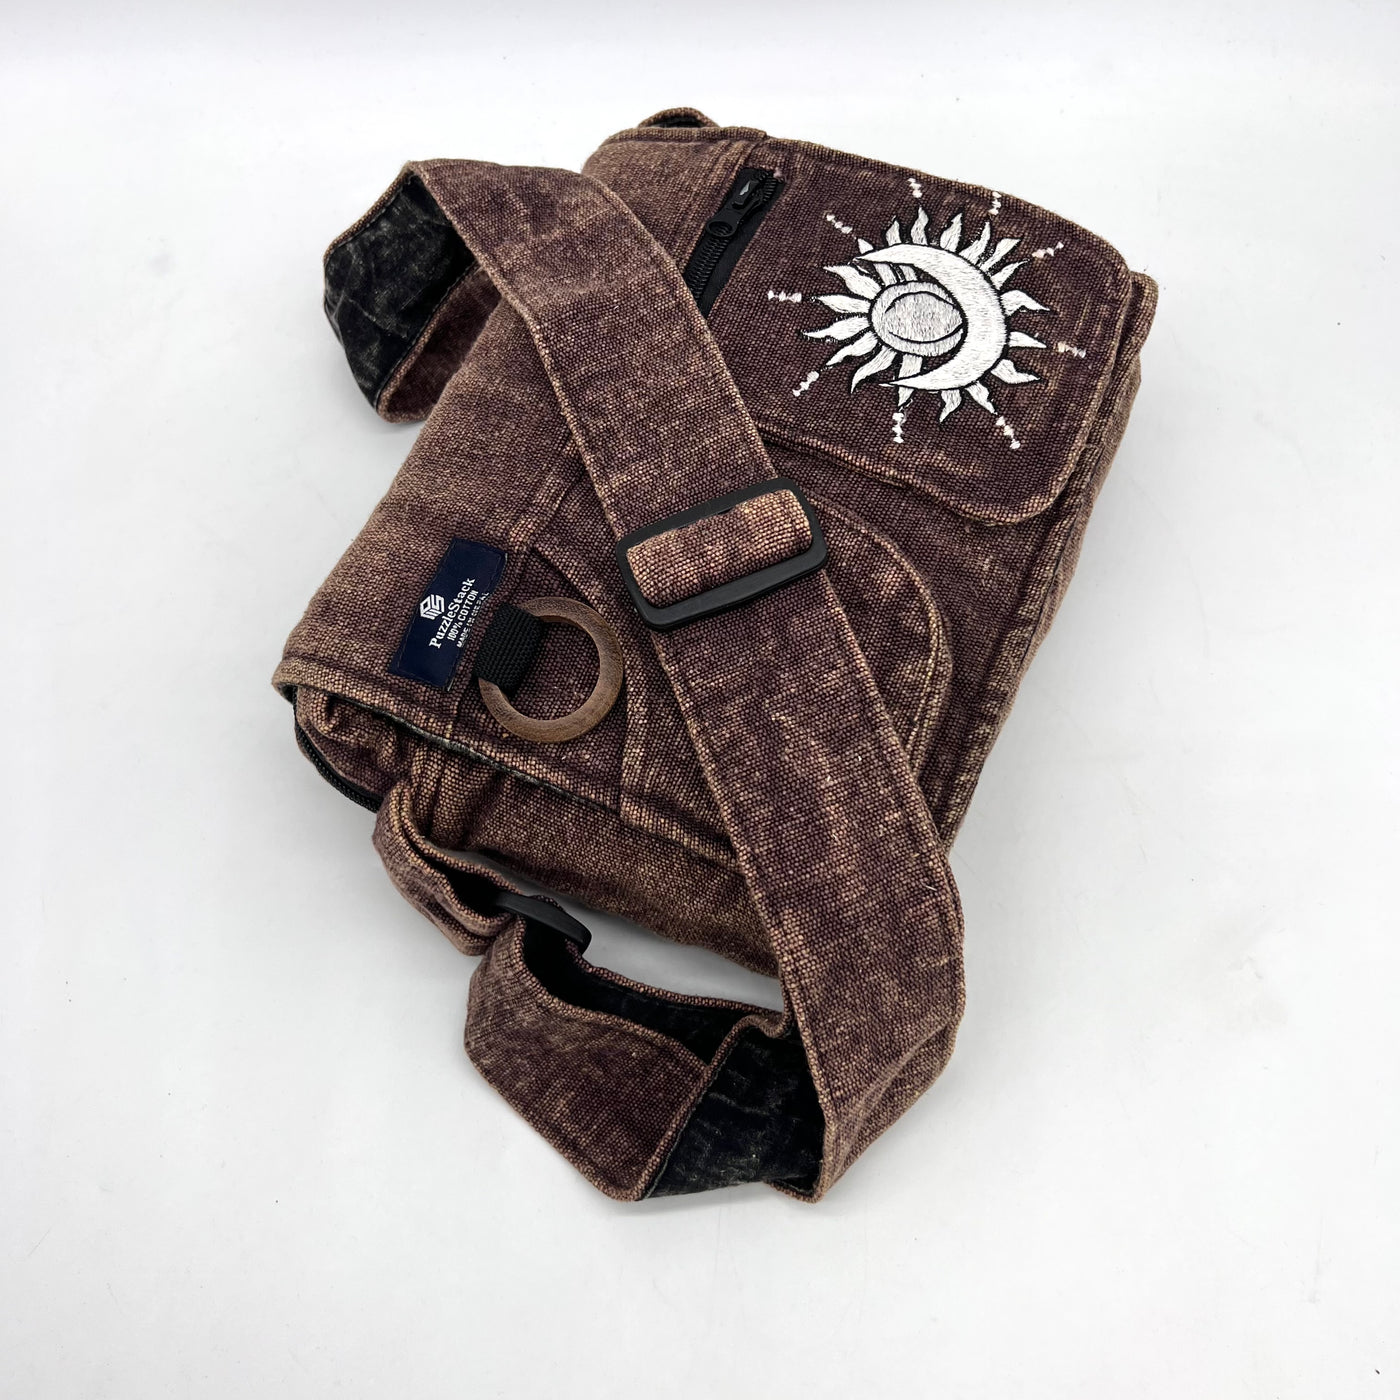 Lukla Brown Celestial Embroidered Messenger Bag